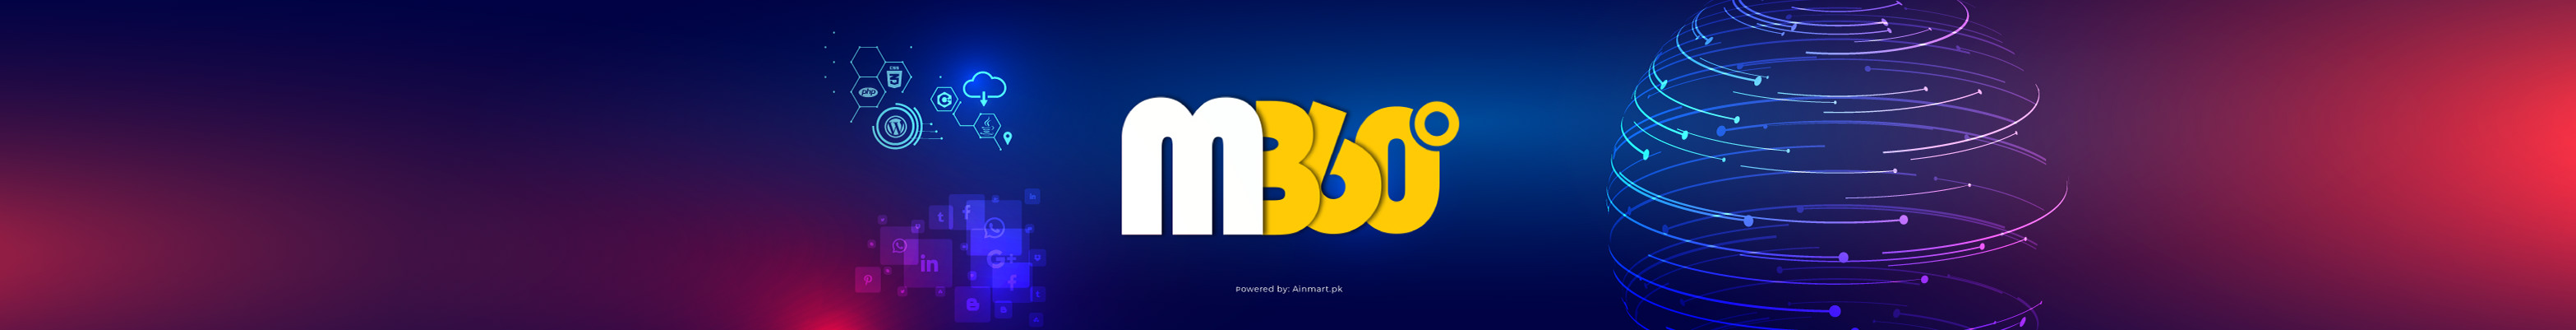 Mb360 Digital Agency's profile banner